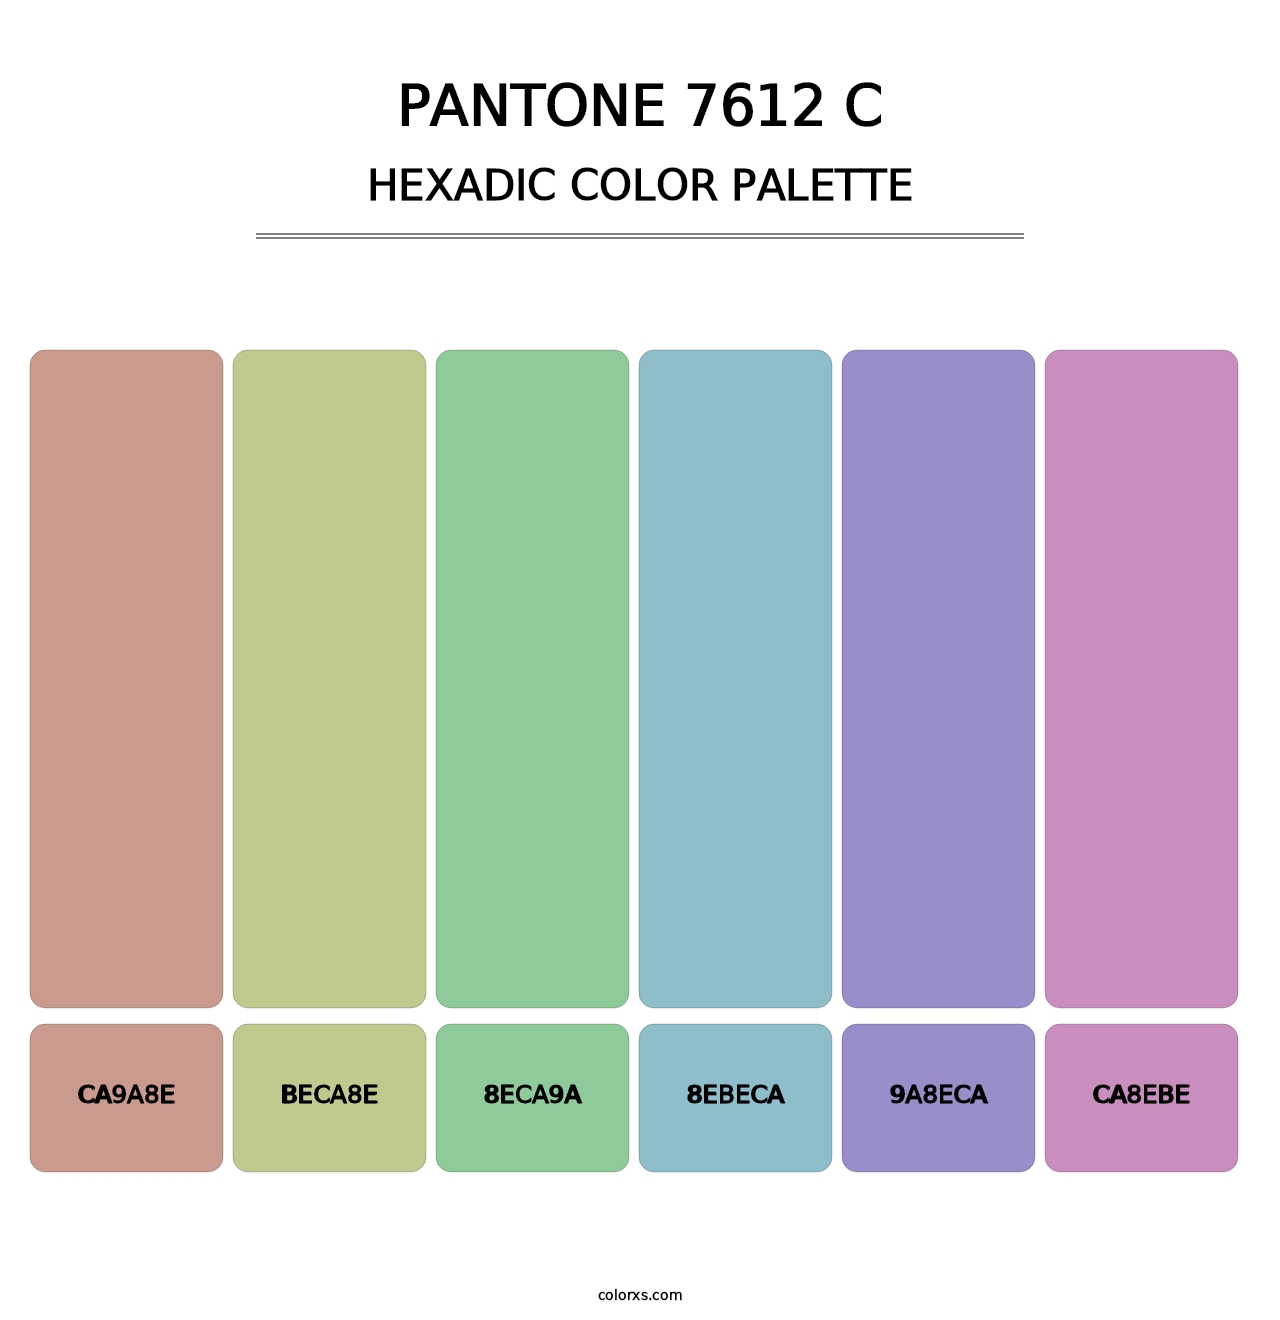 PANTONE 7612 C - Hexadic Color Palette